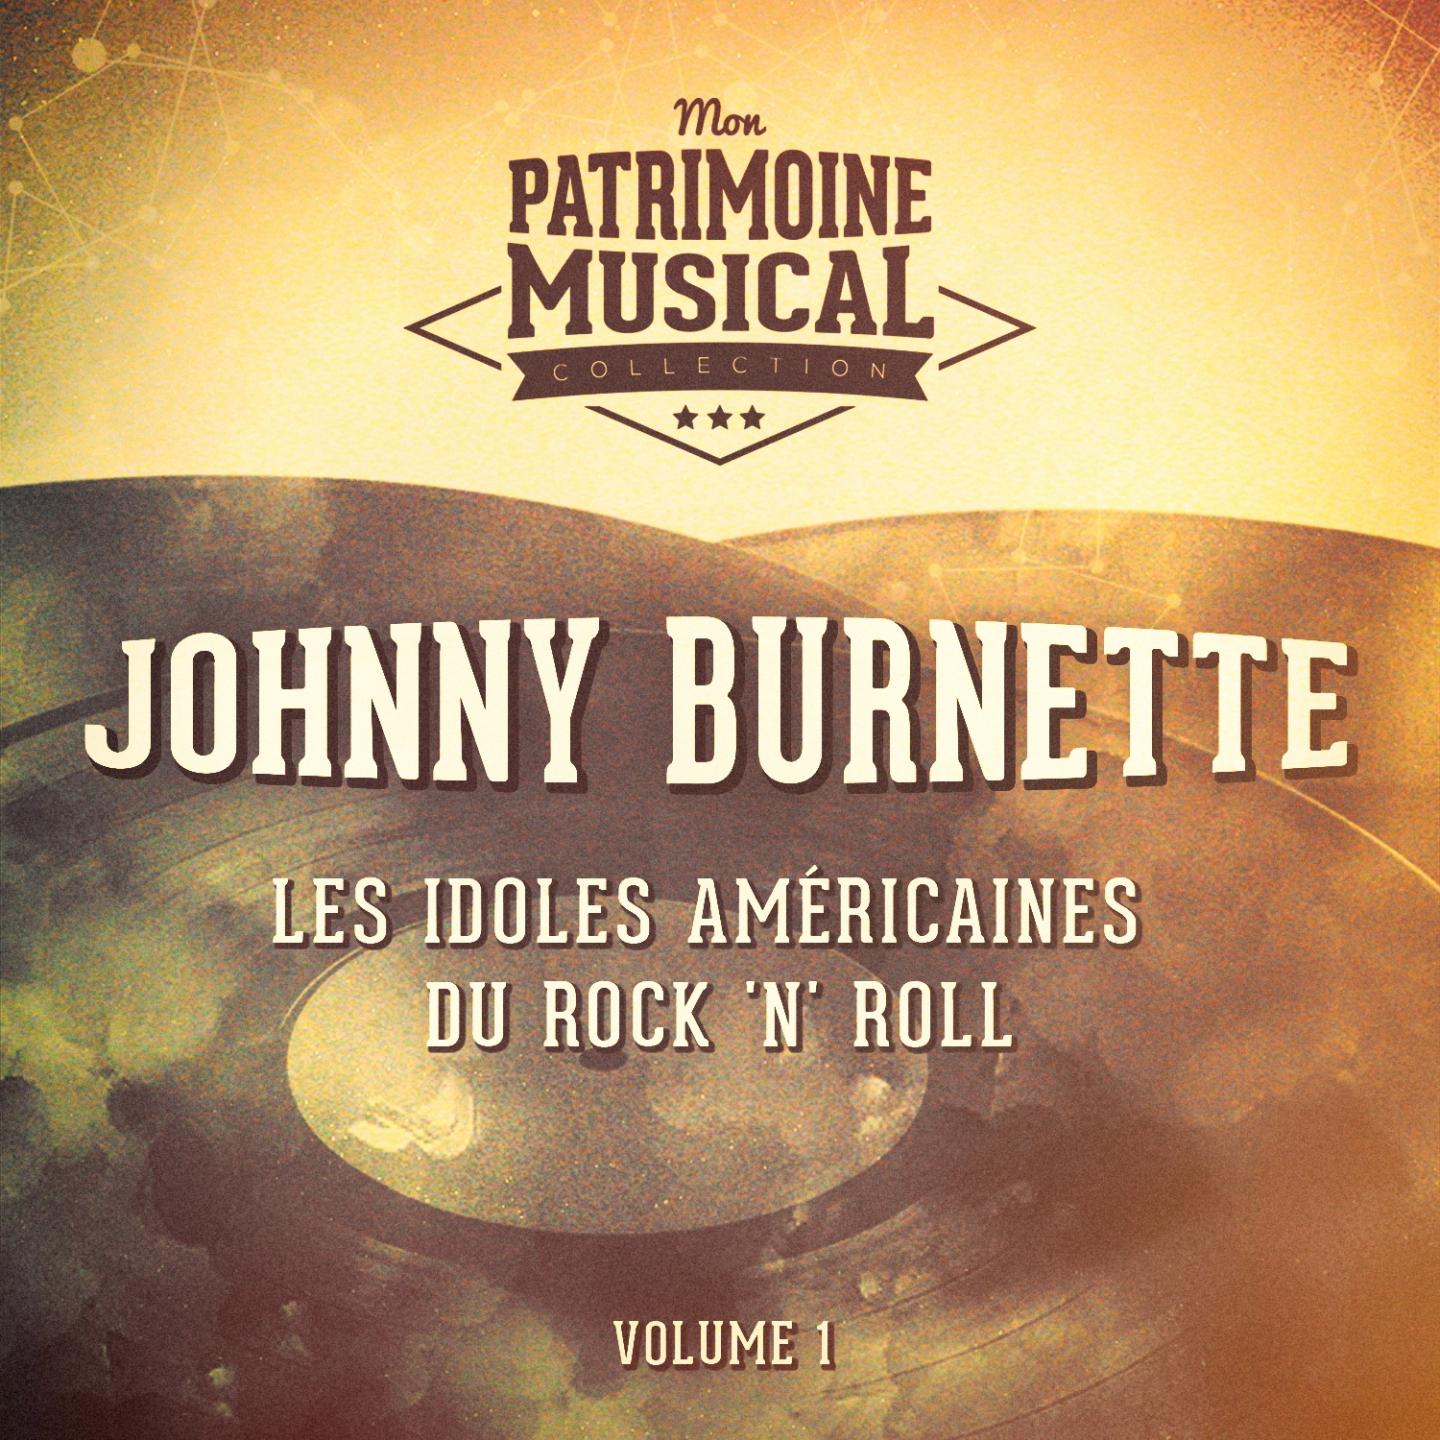 Les idoles ame ricaines du rock ' n' roll : Johnny Burnette, Vol. 1